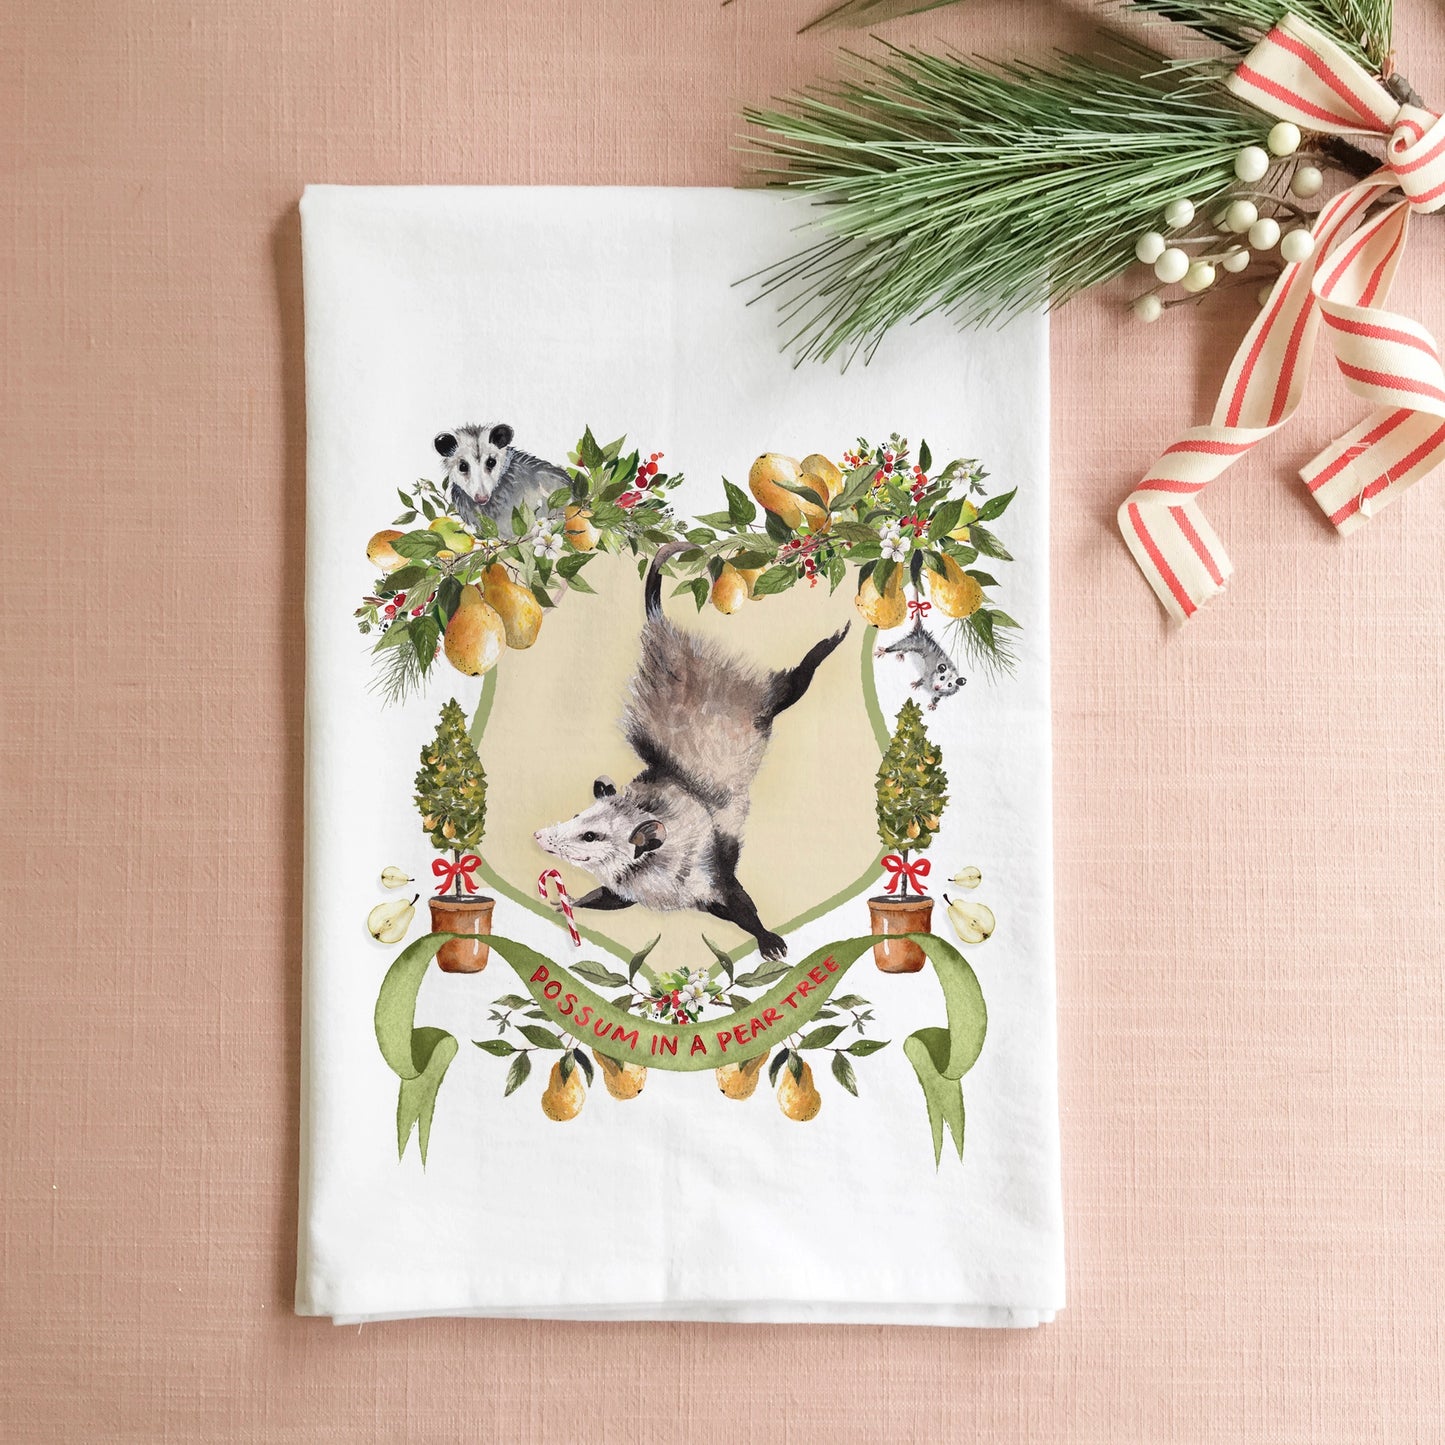 Possum in a Pear Tree Christmas Tea Towel